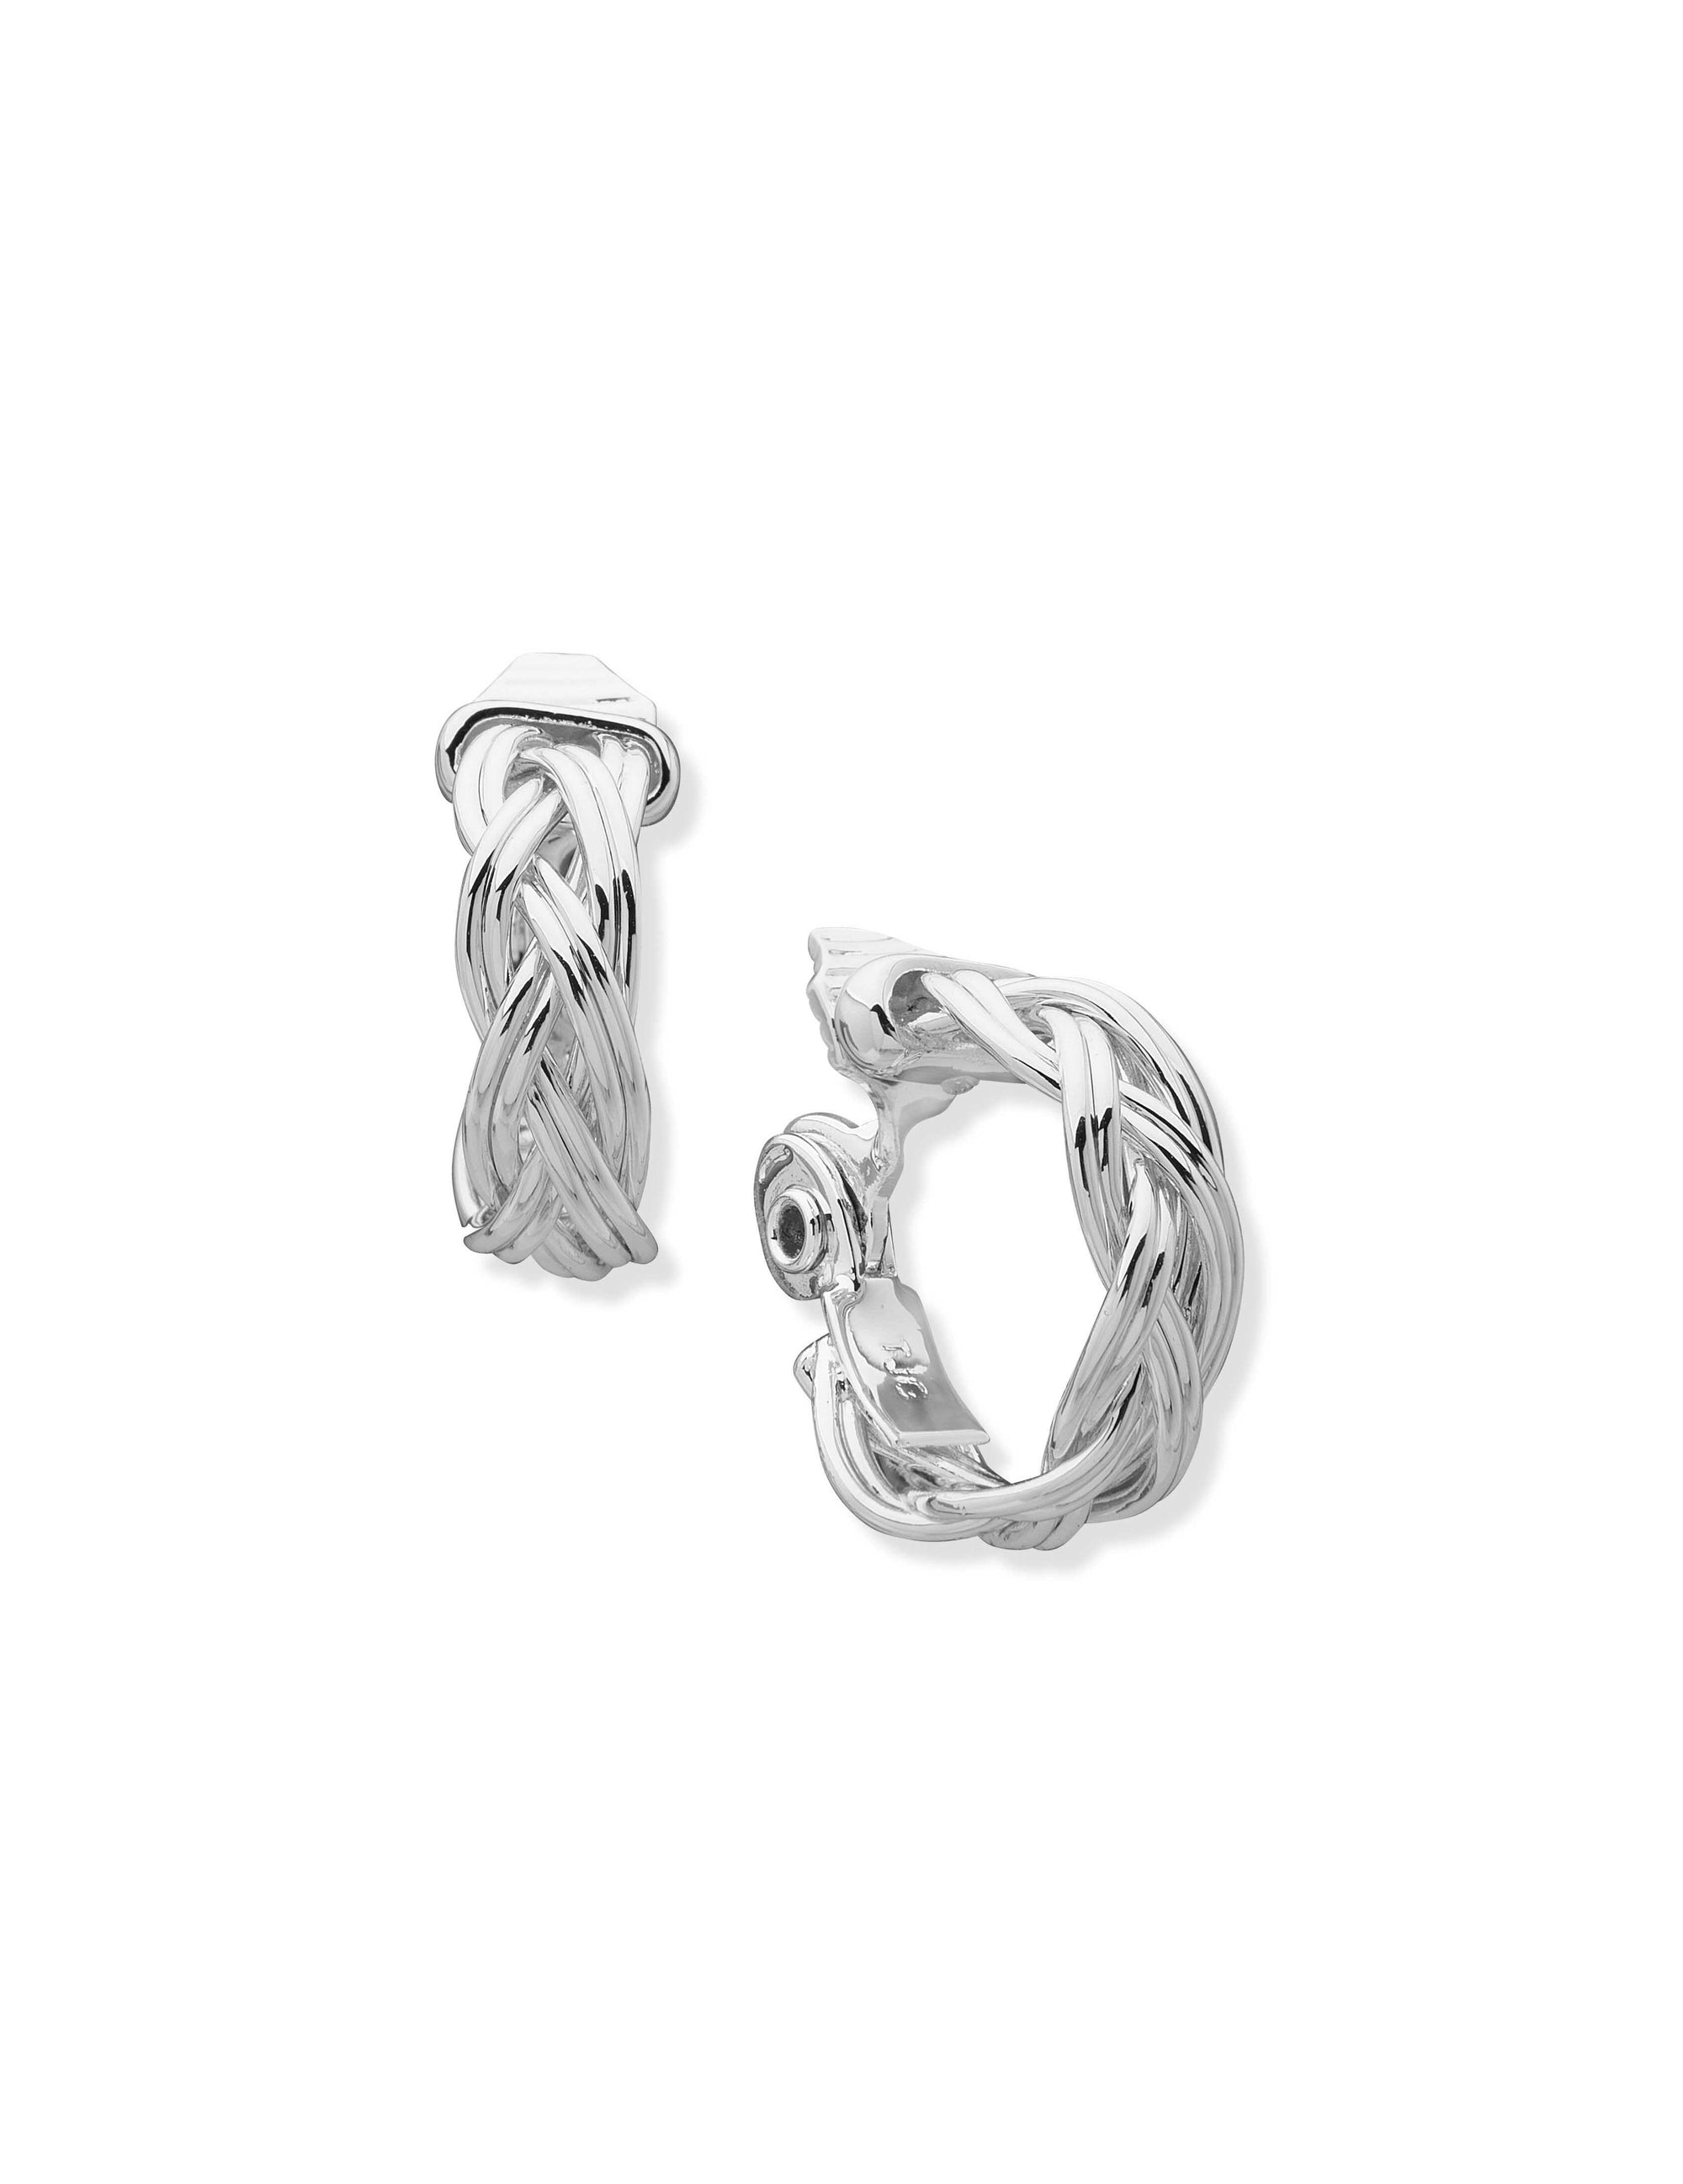 Braided Silver Hoop Earrings – Dandelion Jewelry